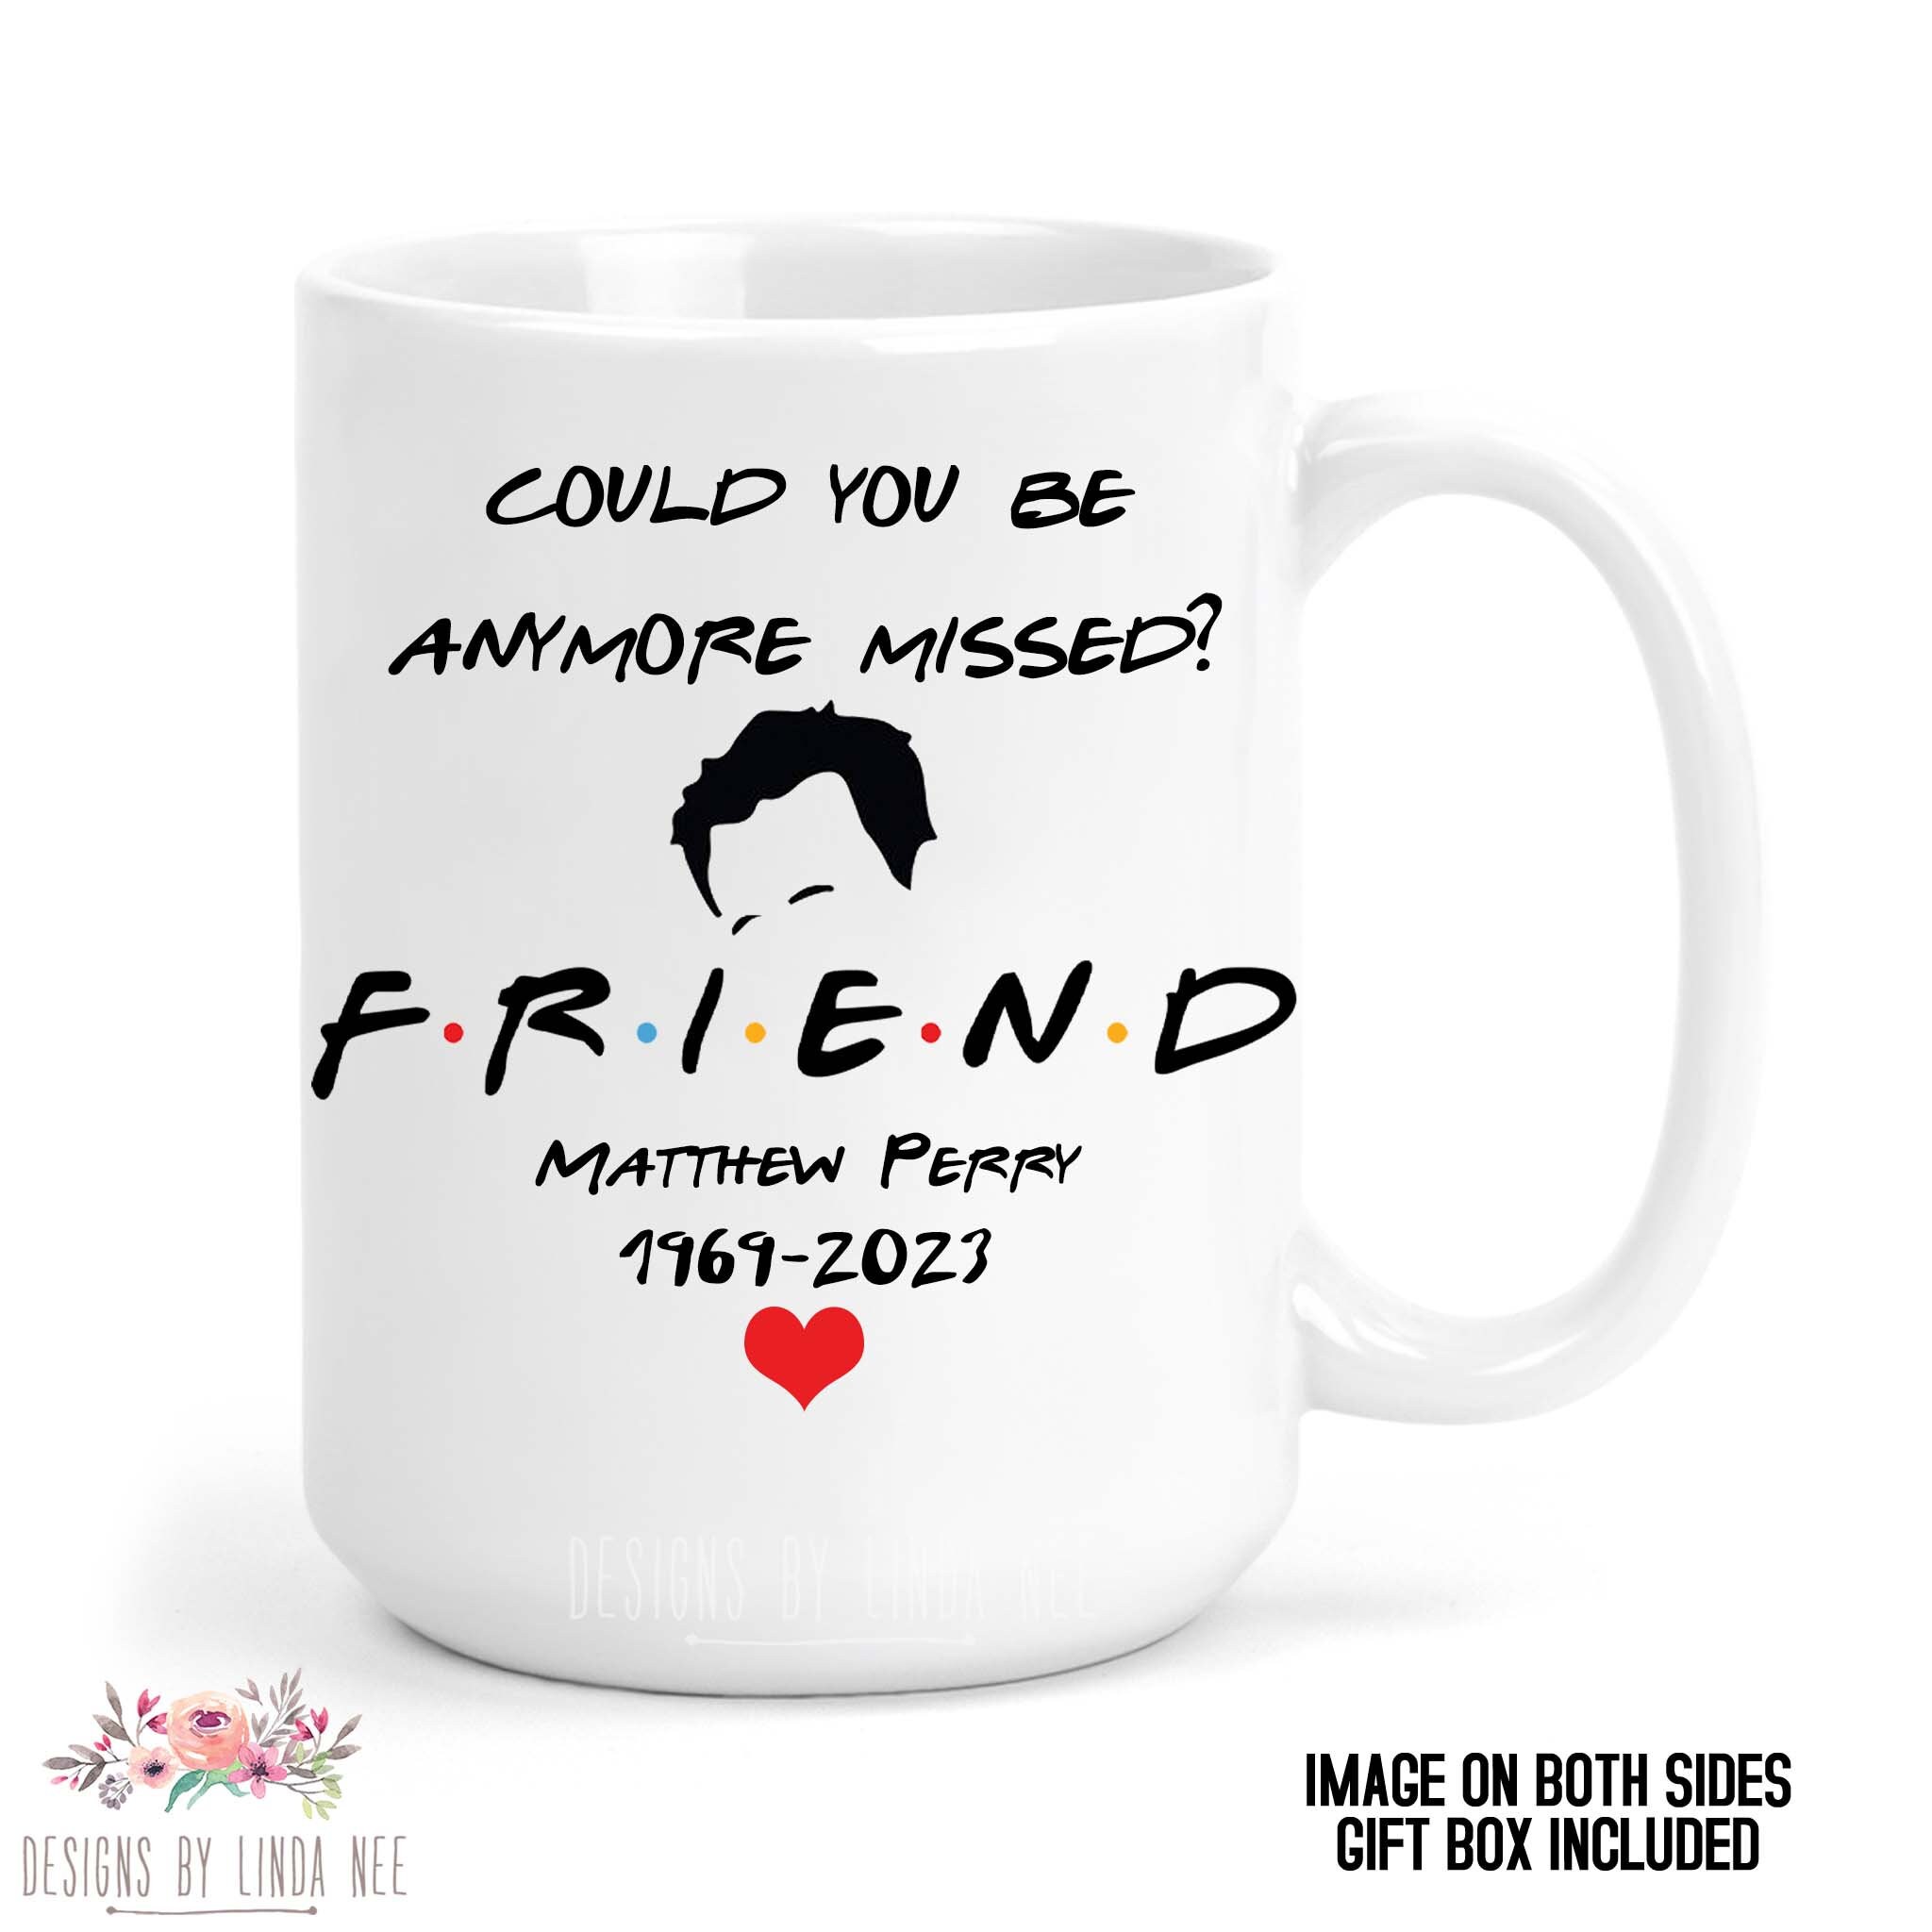 Friends The TV Series Cast Coffee Tea Mug Cup, Large 20 OZ